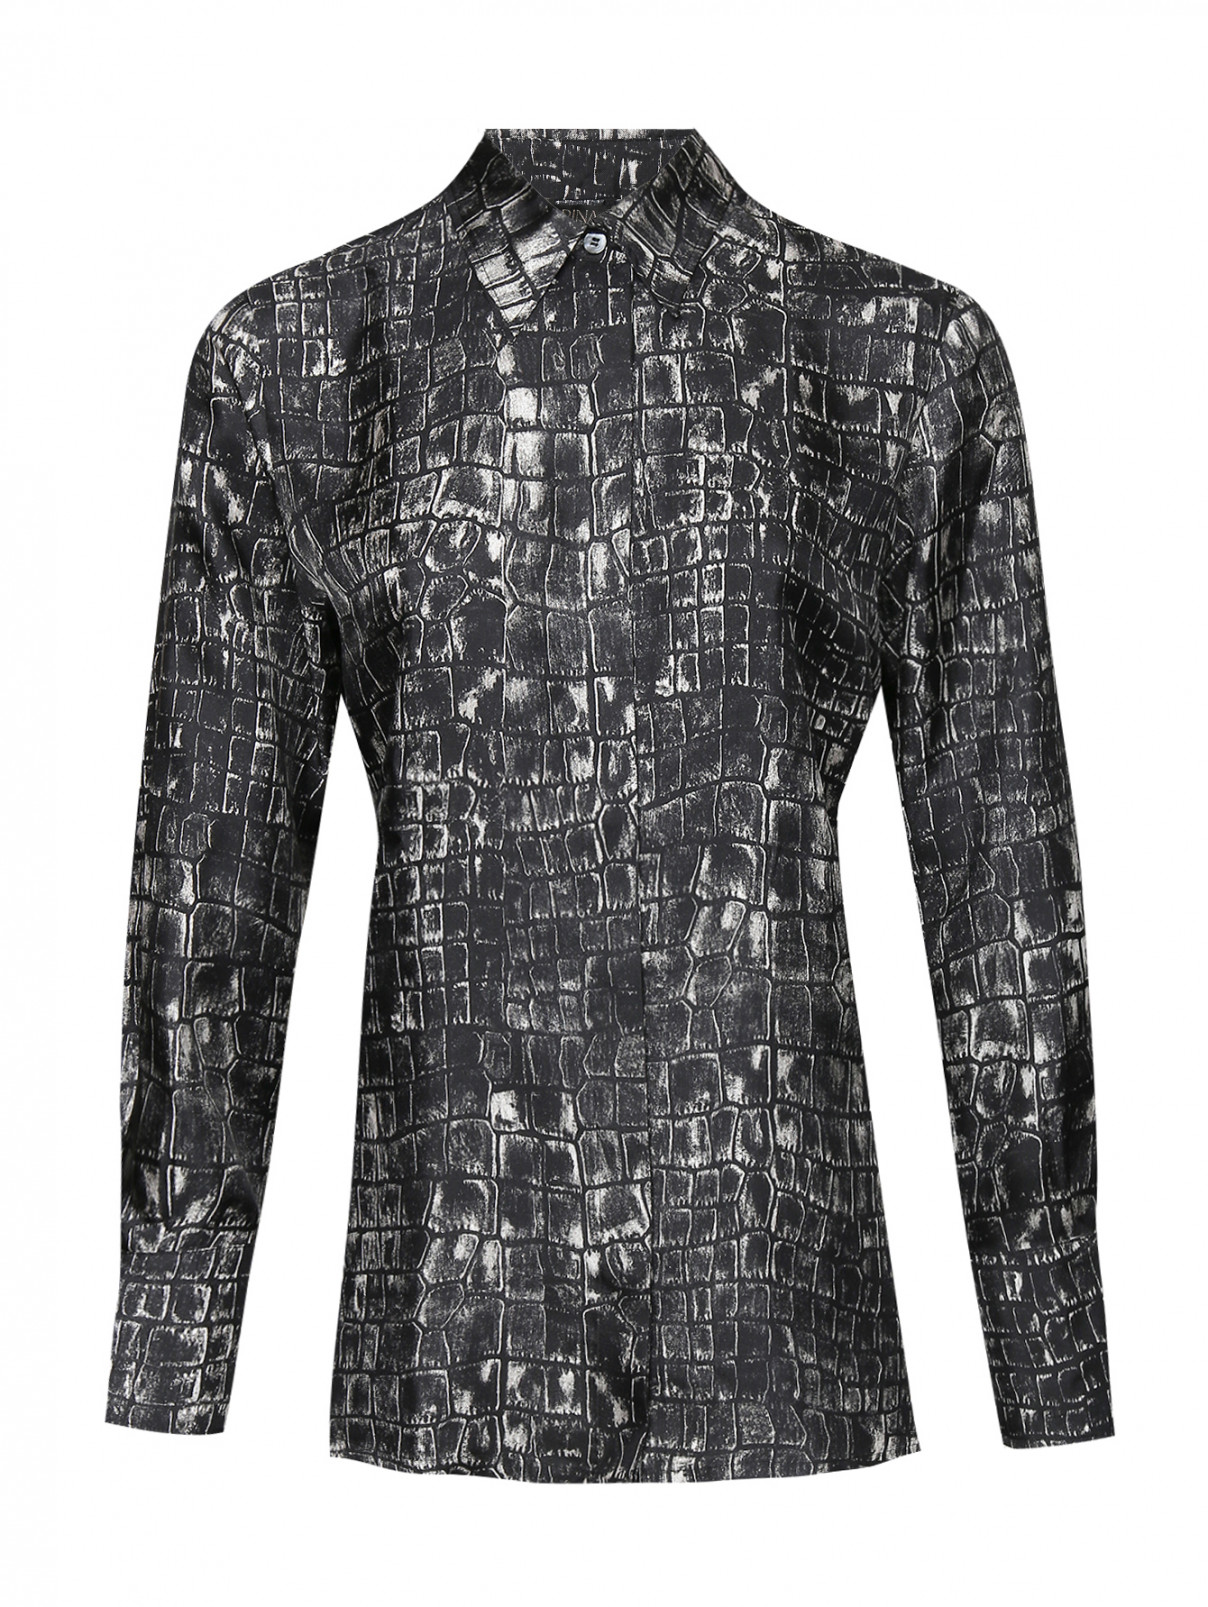 Блузка из шелка с узором Marina Rinaldi  –  Общий вид  – Цвет:  Узор